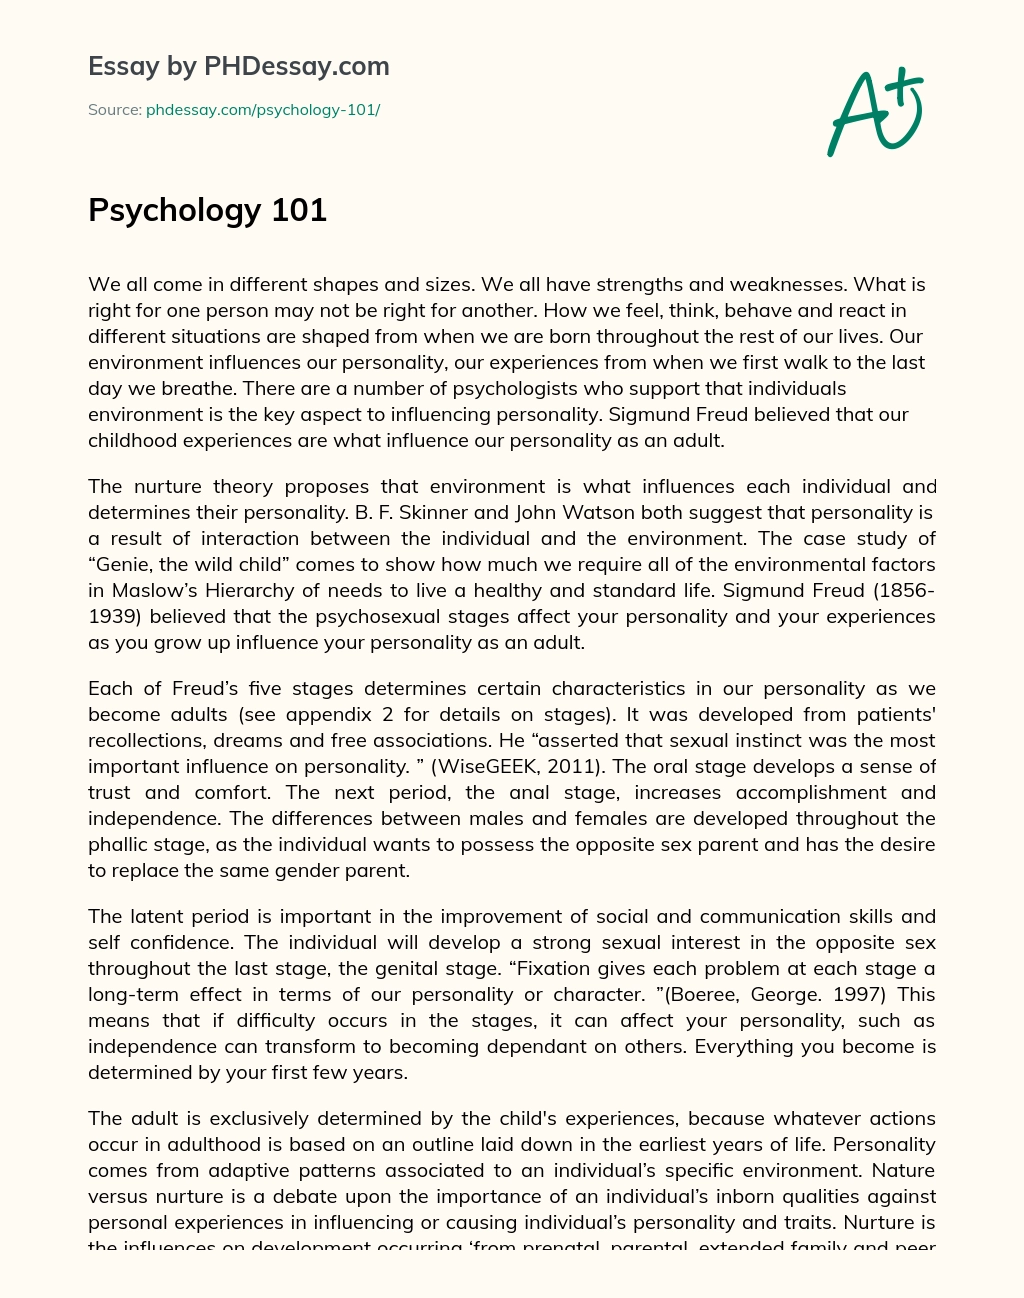 Psychology 101 essay